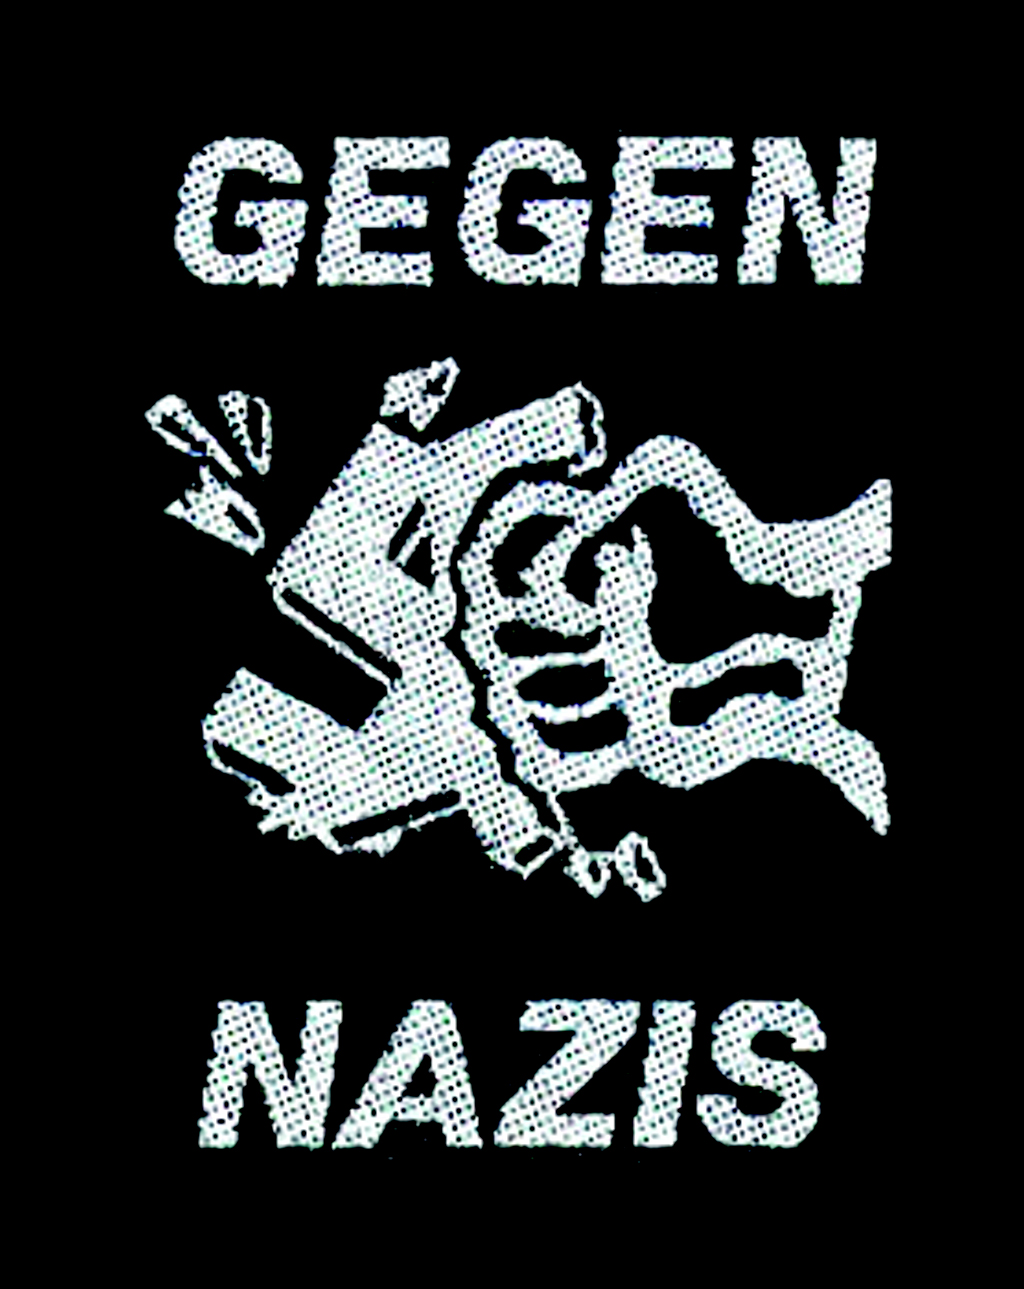 085 Gegen Nazis